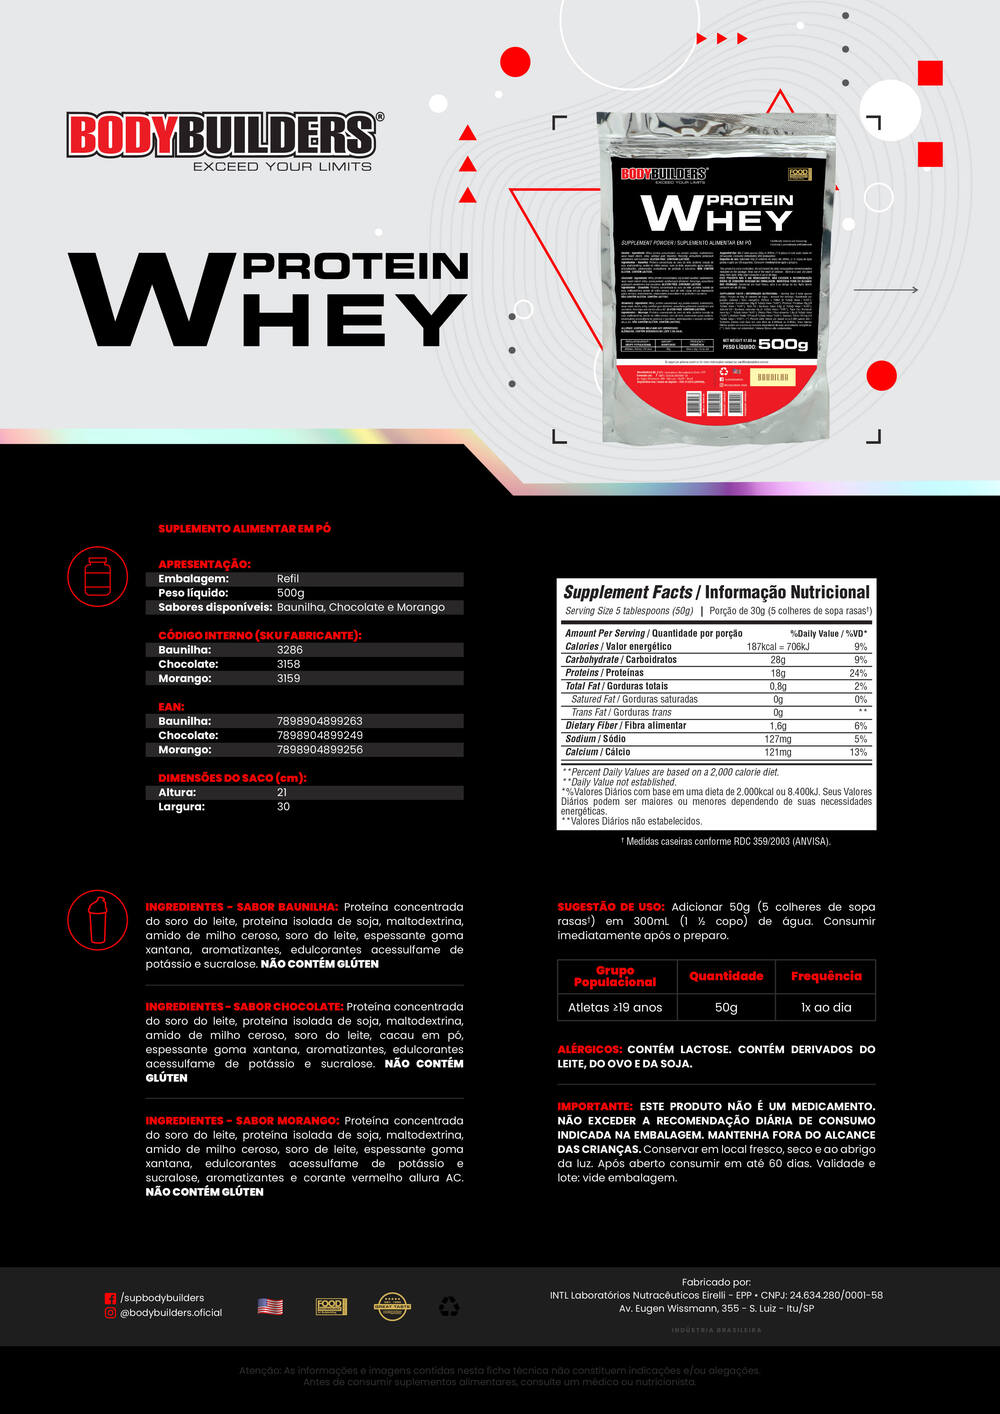 KIT Whey Protein 500g + 2x BCAA 100g + Cocktail Shaker - Bodybuilders